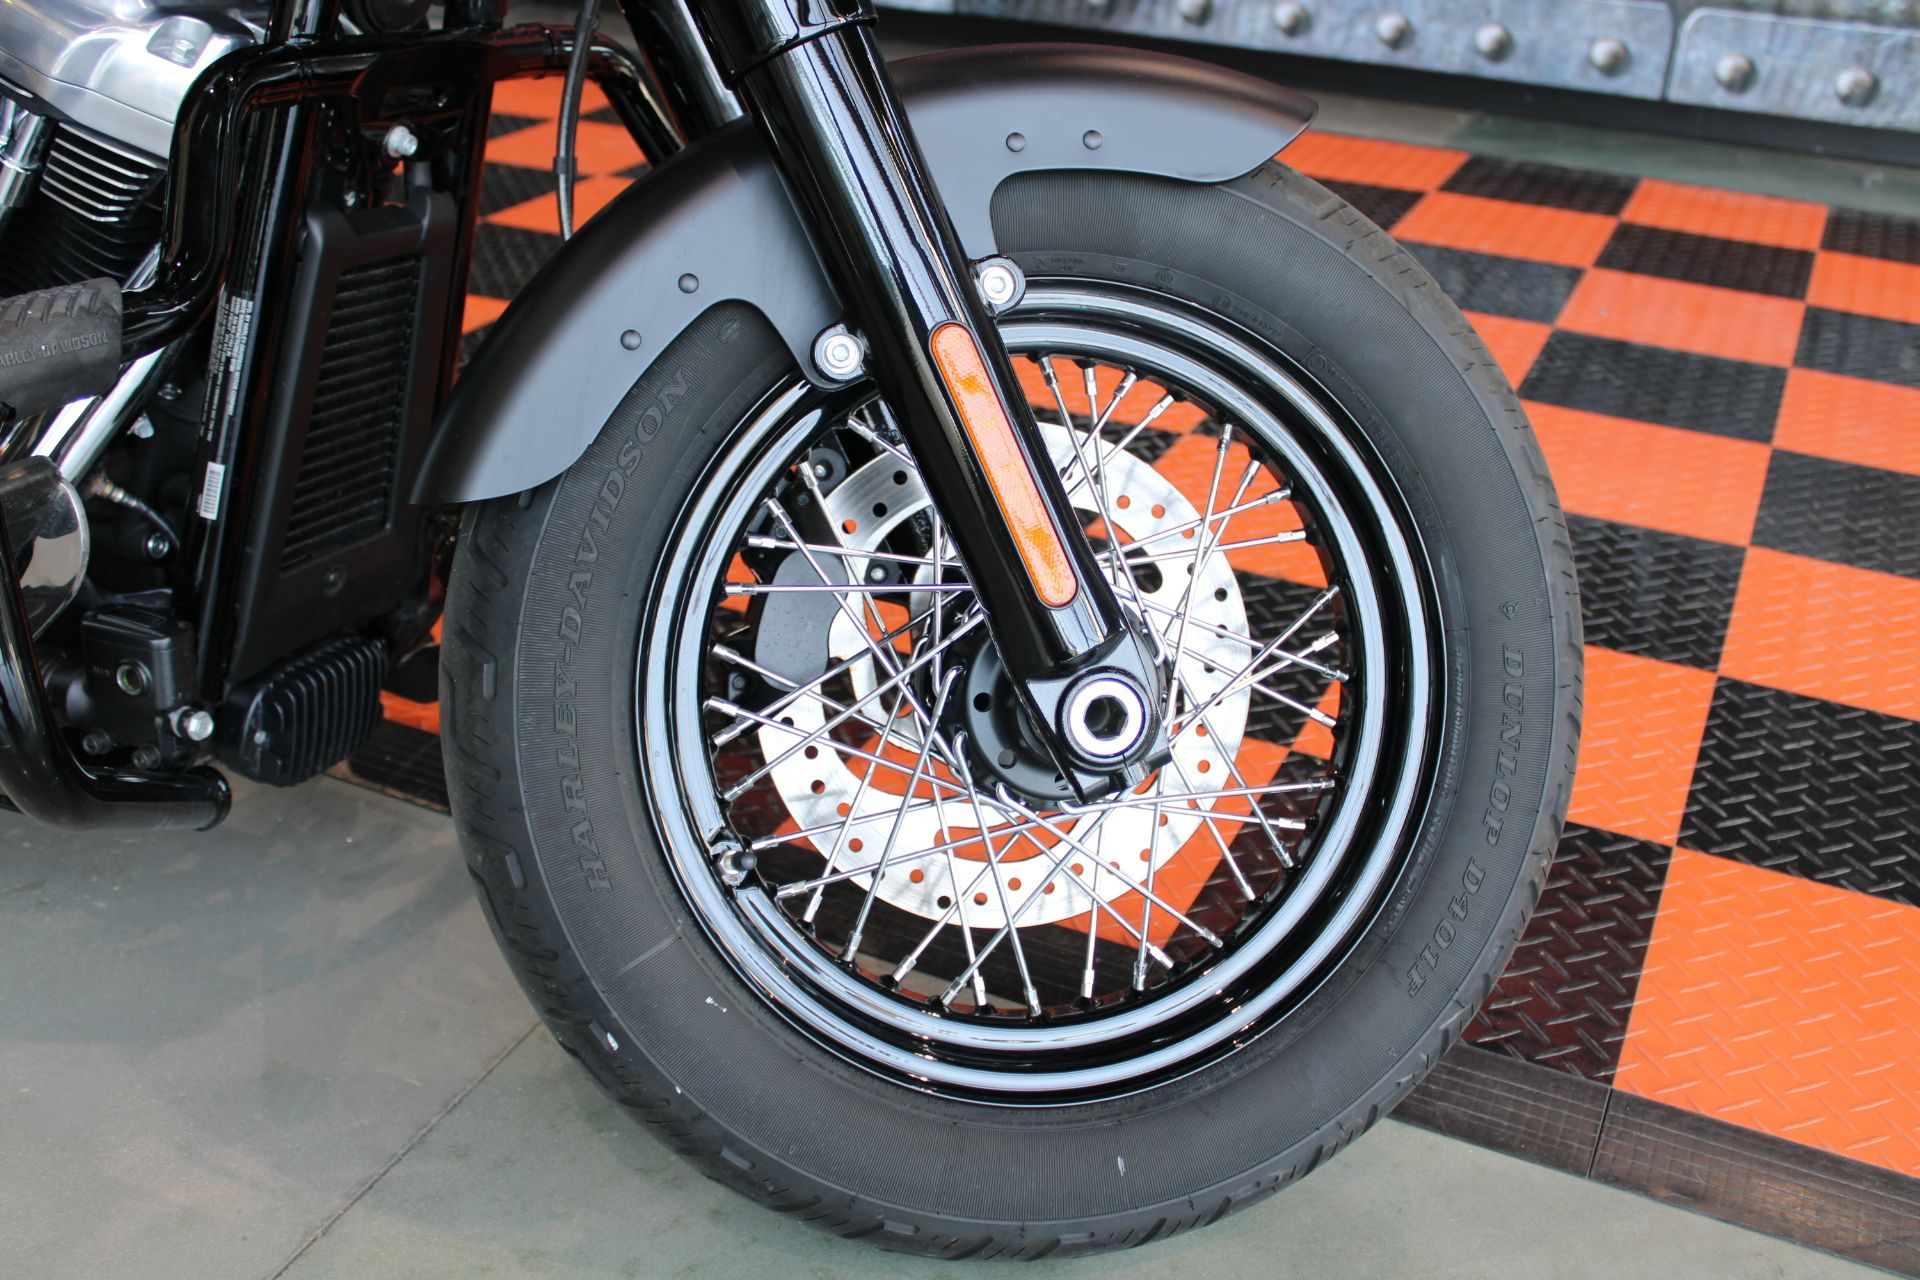 2020 Harley-Davidson Softail Slim® in Shorewood, Illinois - Photo 3